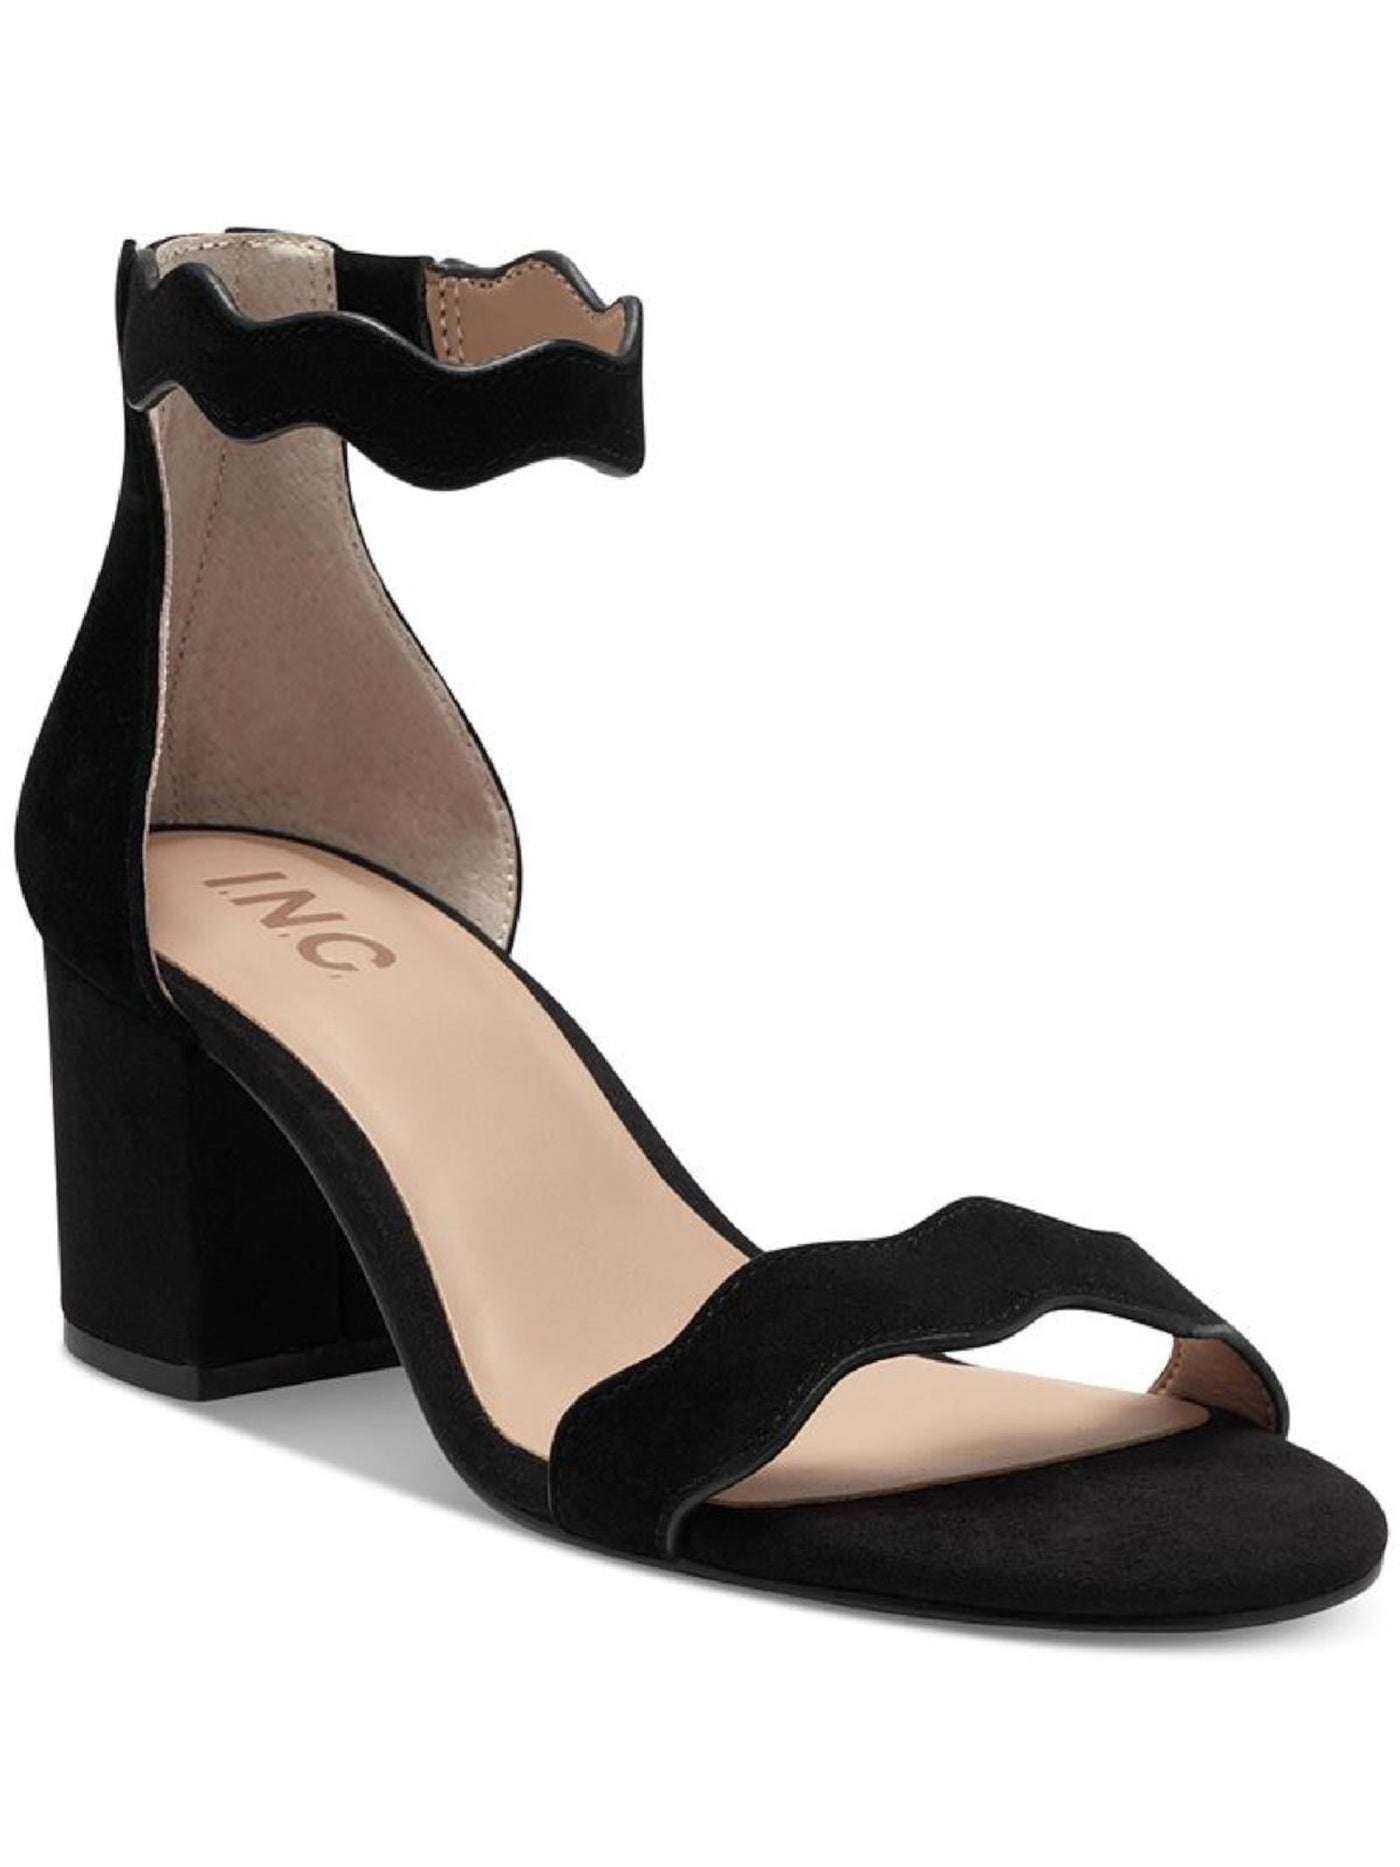 INC Womens Black Rhinestone Ankle Strap Scalloped Kadwin Round Toe Block Heel Zip-Up Leather Dress Sandals Shoes 5 M